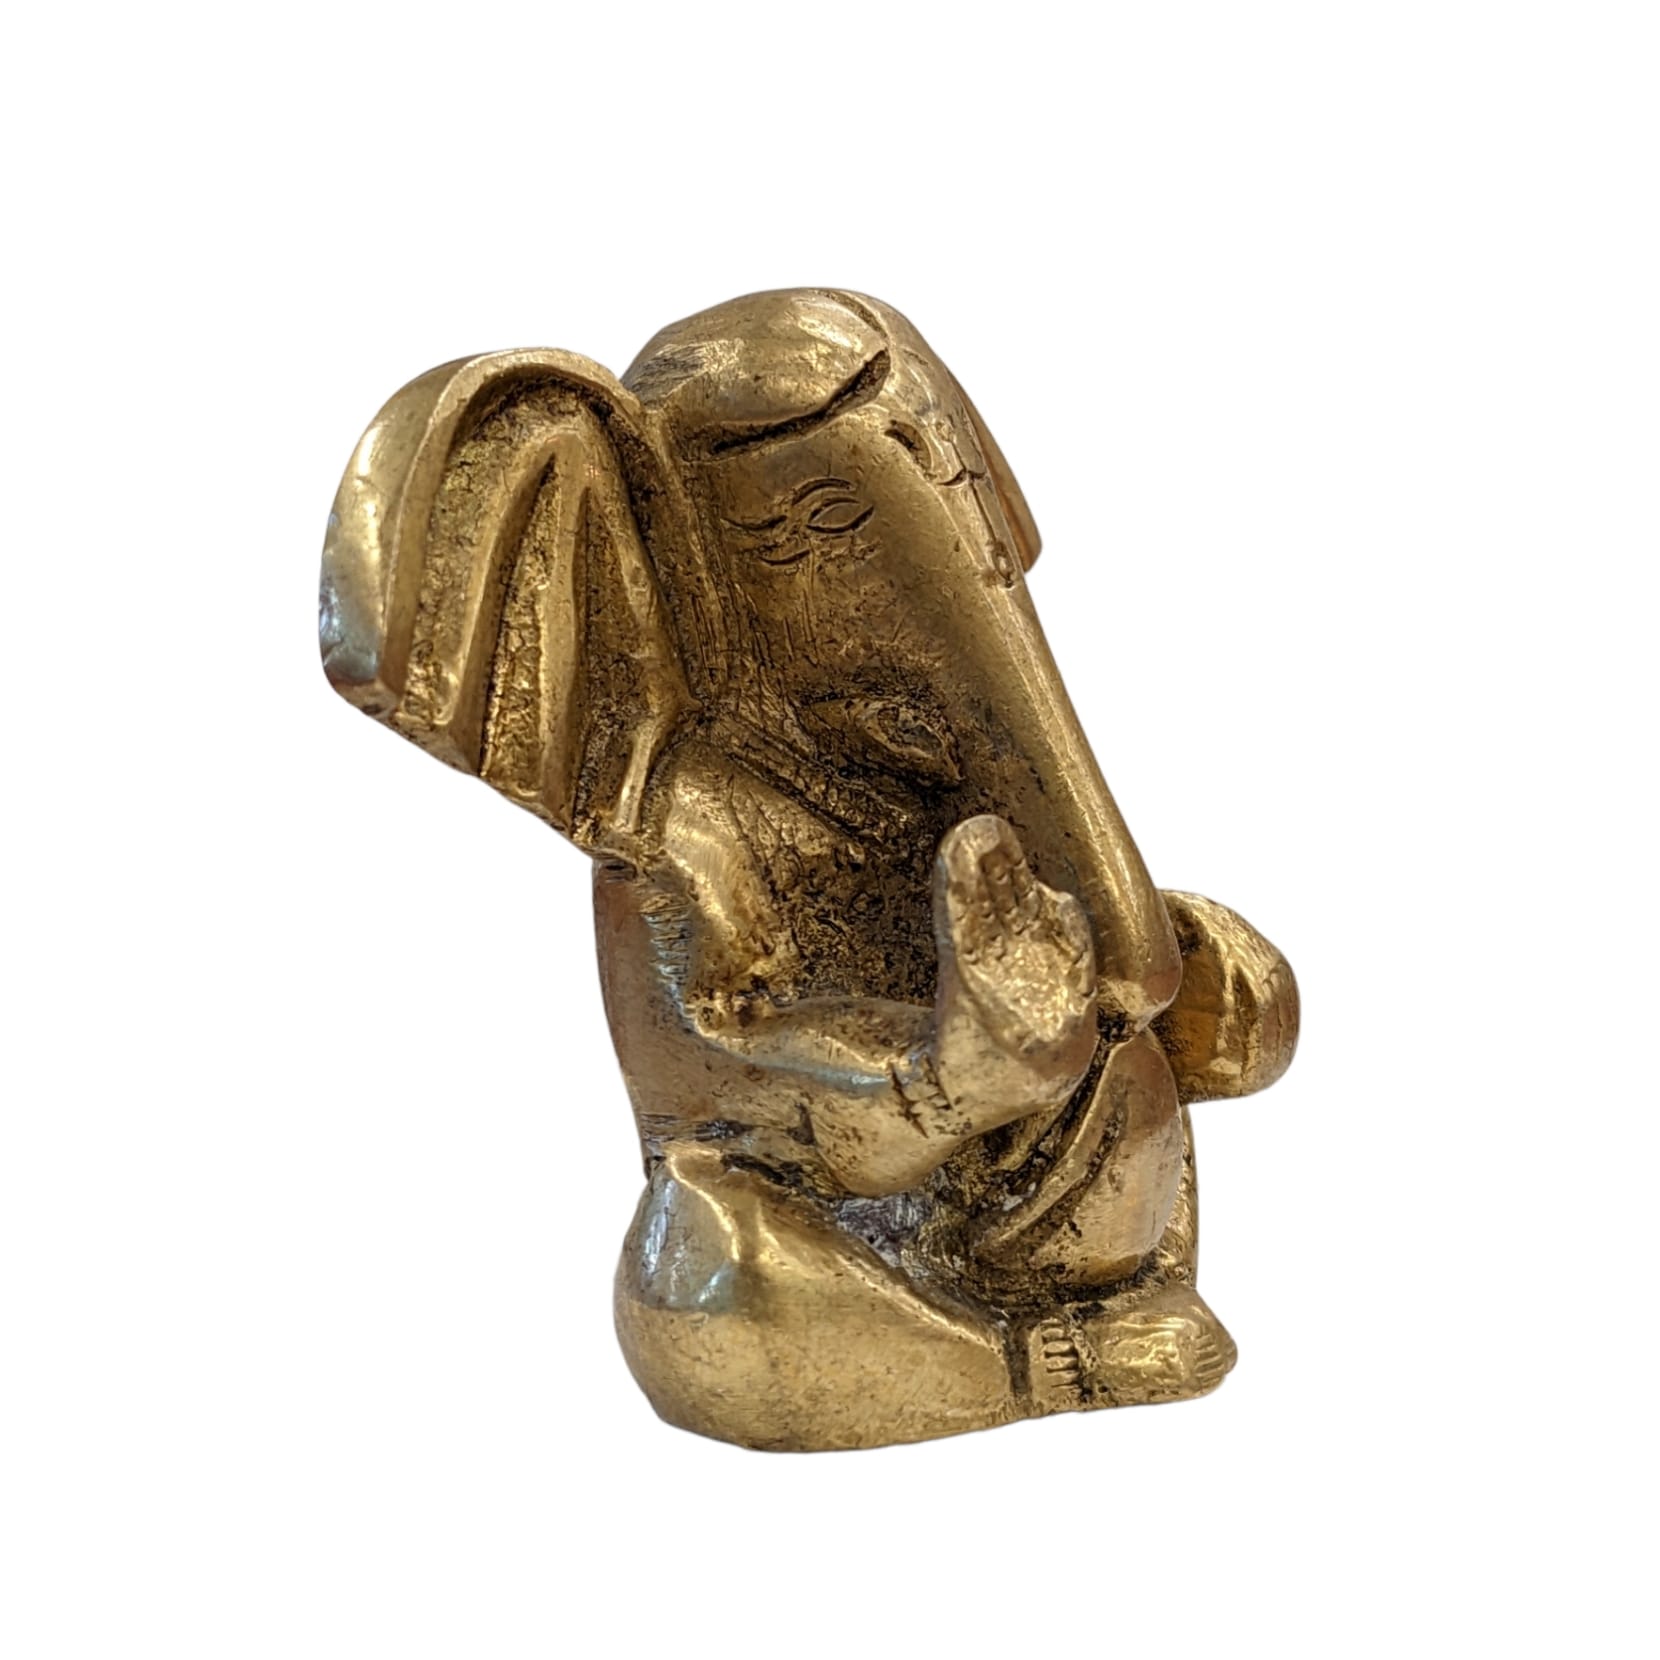 Side view Image of a Brass Car Dashboard Idol of Ganesha